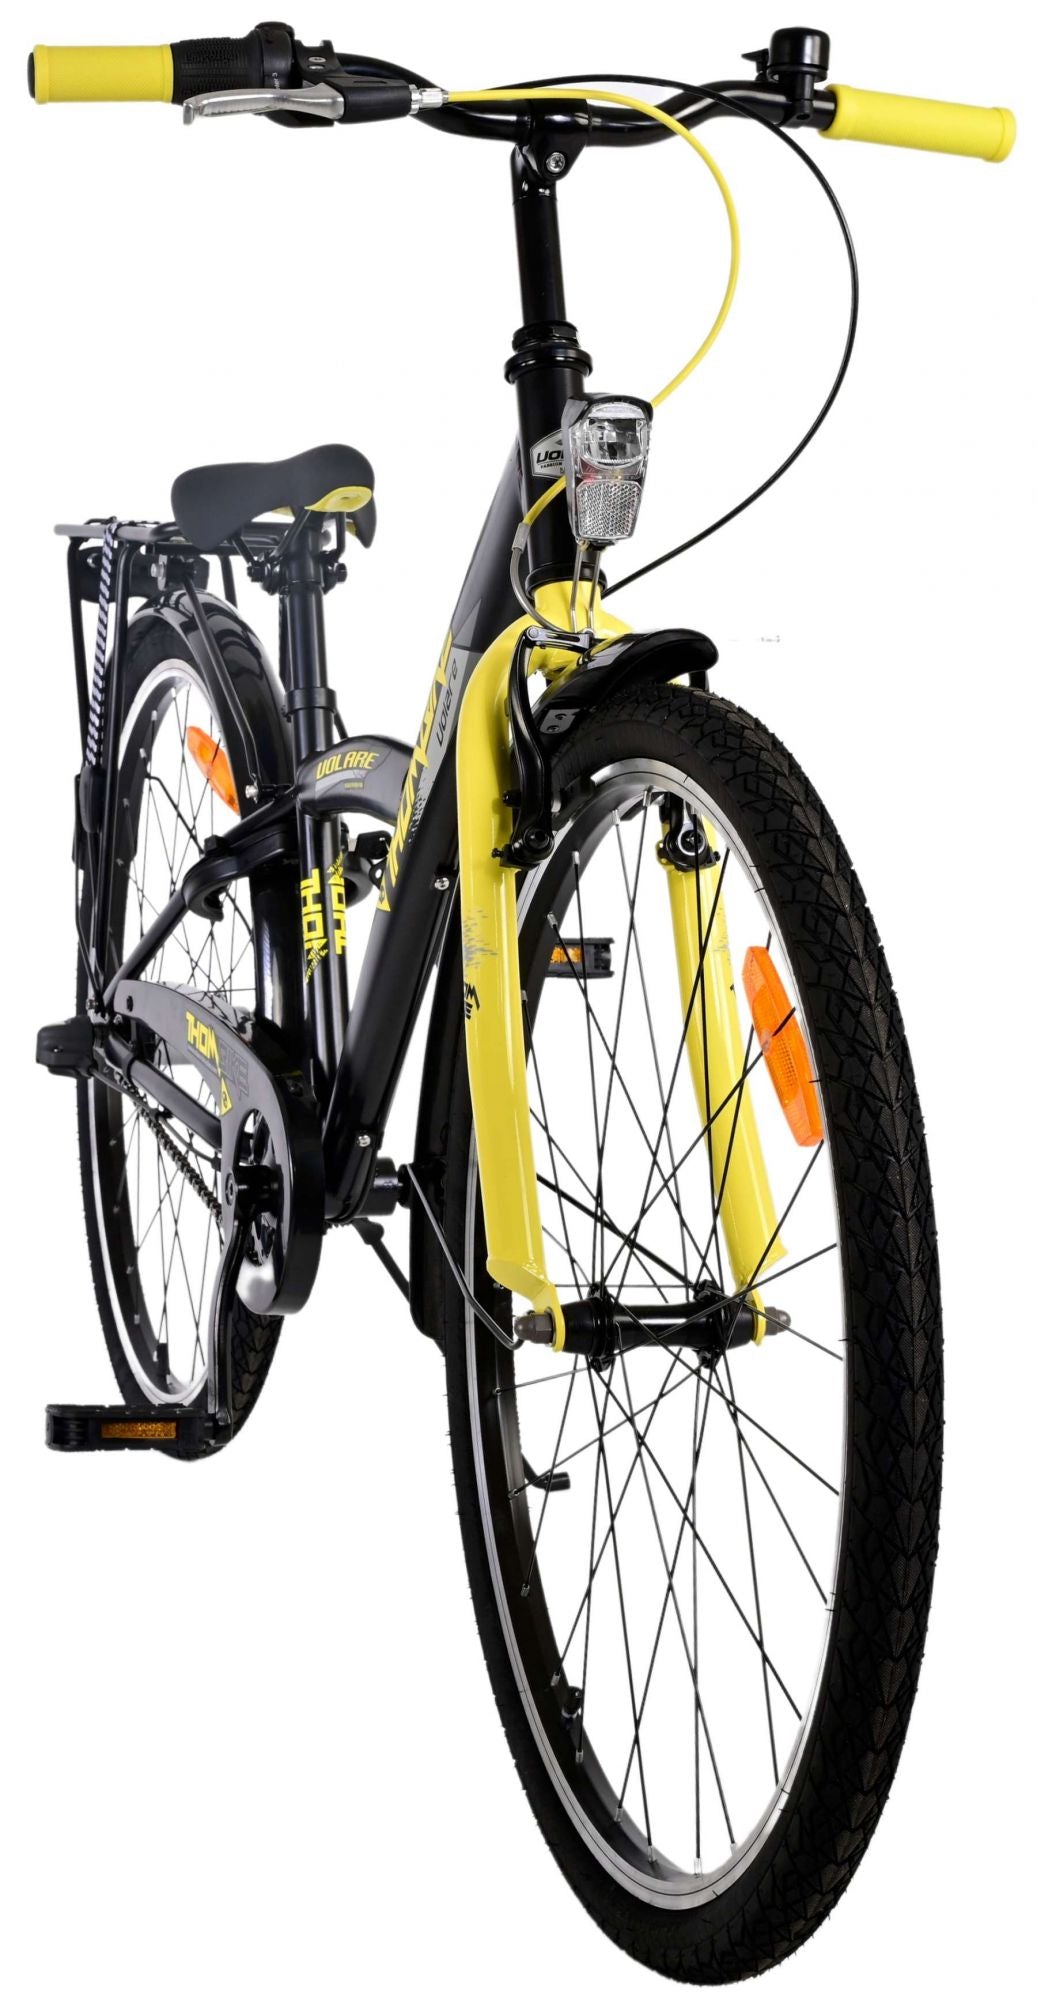 Volare Thombike Bike para niños - Niños - 26 pulgadas - Amarillo negro - 3 engranajes